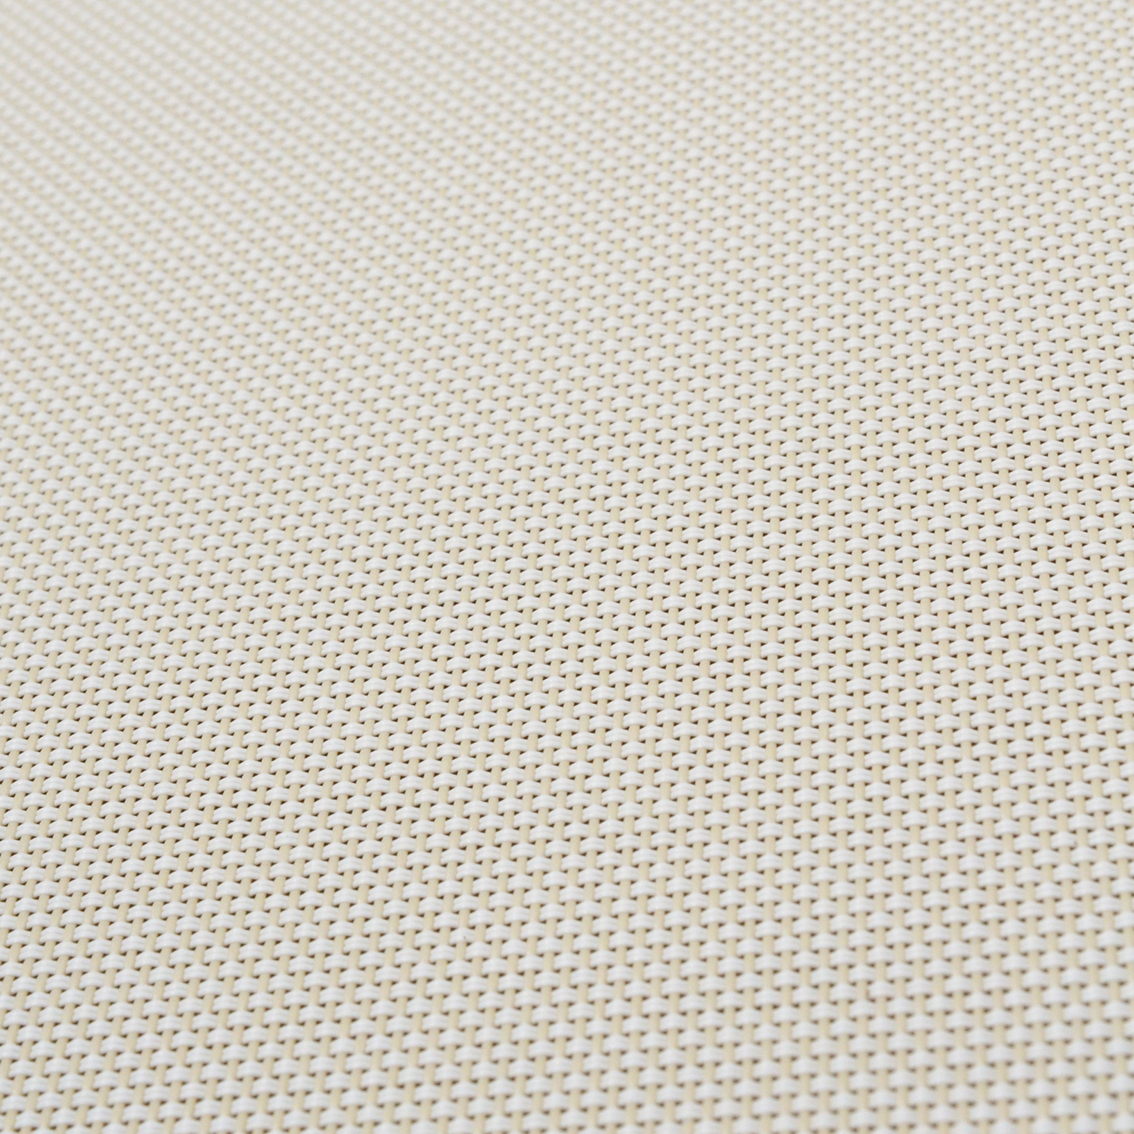 Keystone Fabrics Regal Cordless Outdoor Sun Shade - Image 3 of 3